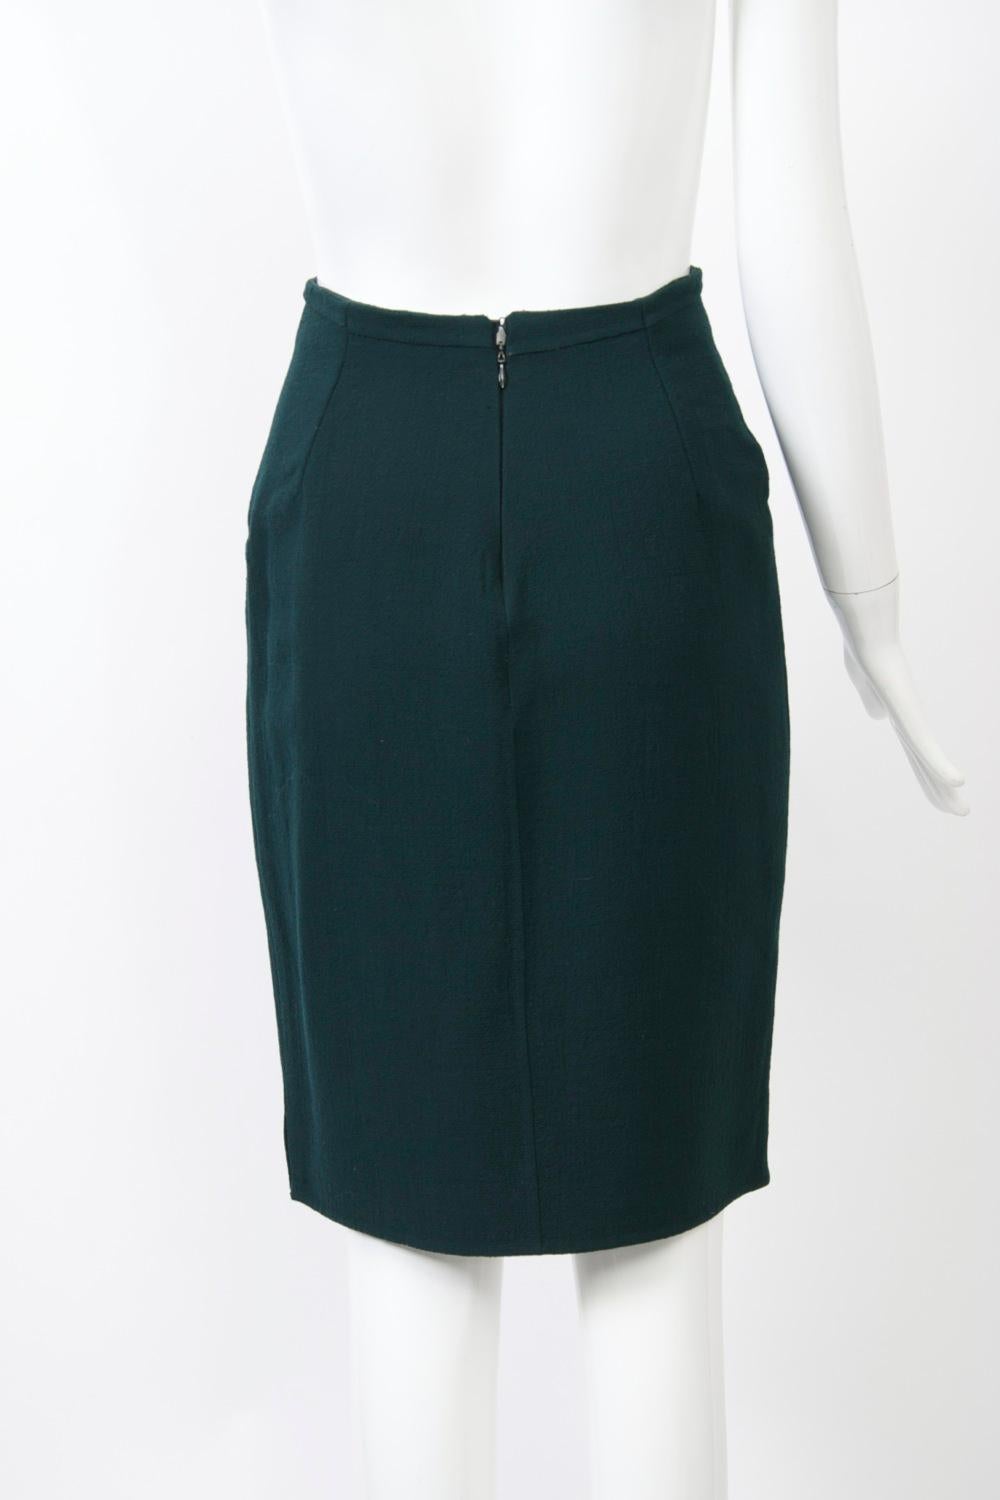 Women's Geoffrey Beene Forest Green Suit For Sale